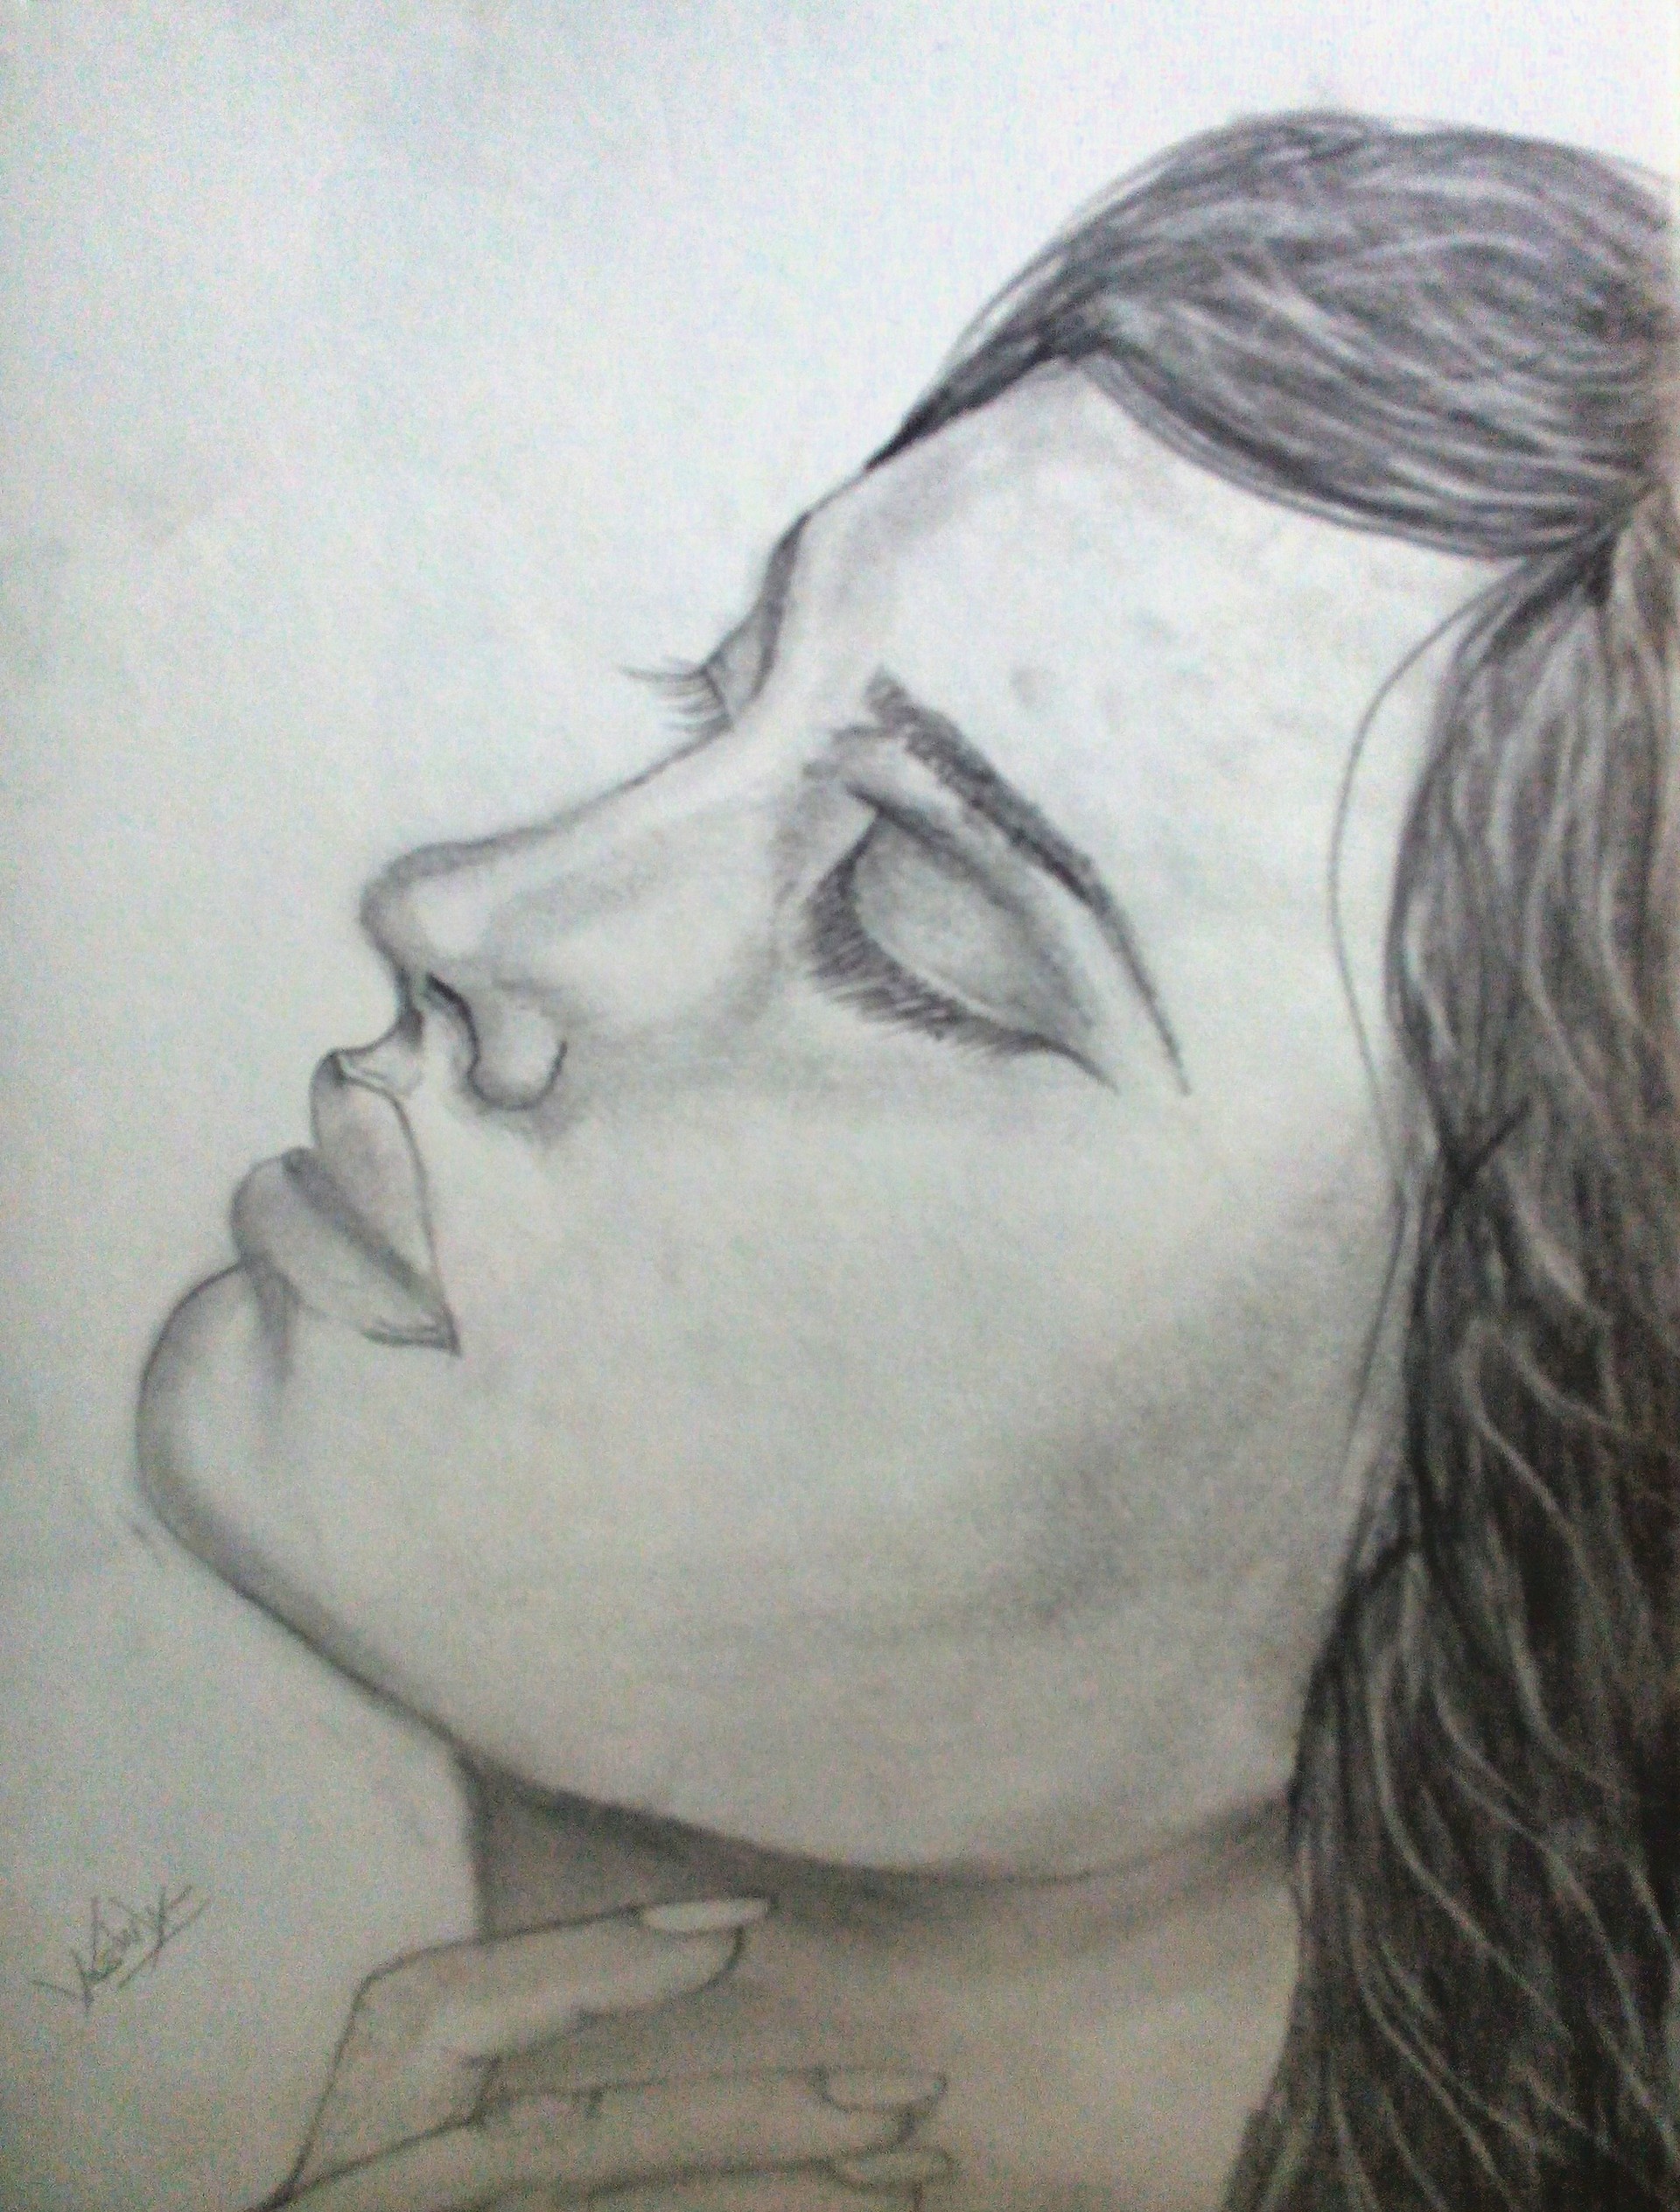 Hot girl drawing